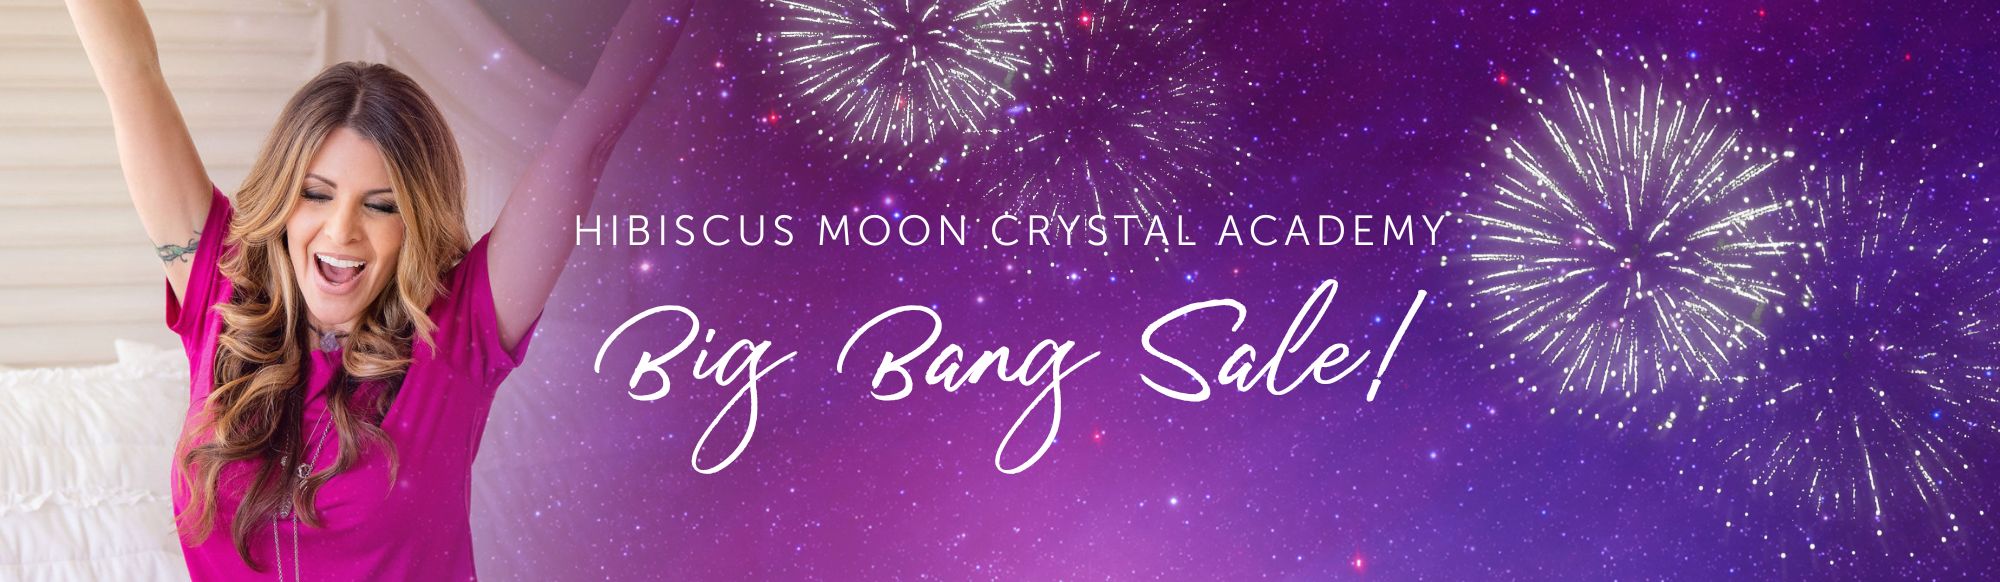 Hibiscus Moon Crystal Academy Big Bang Sale